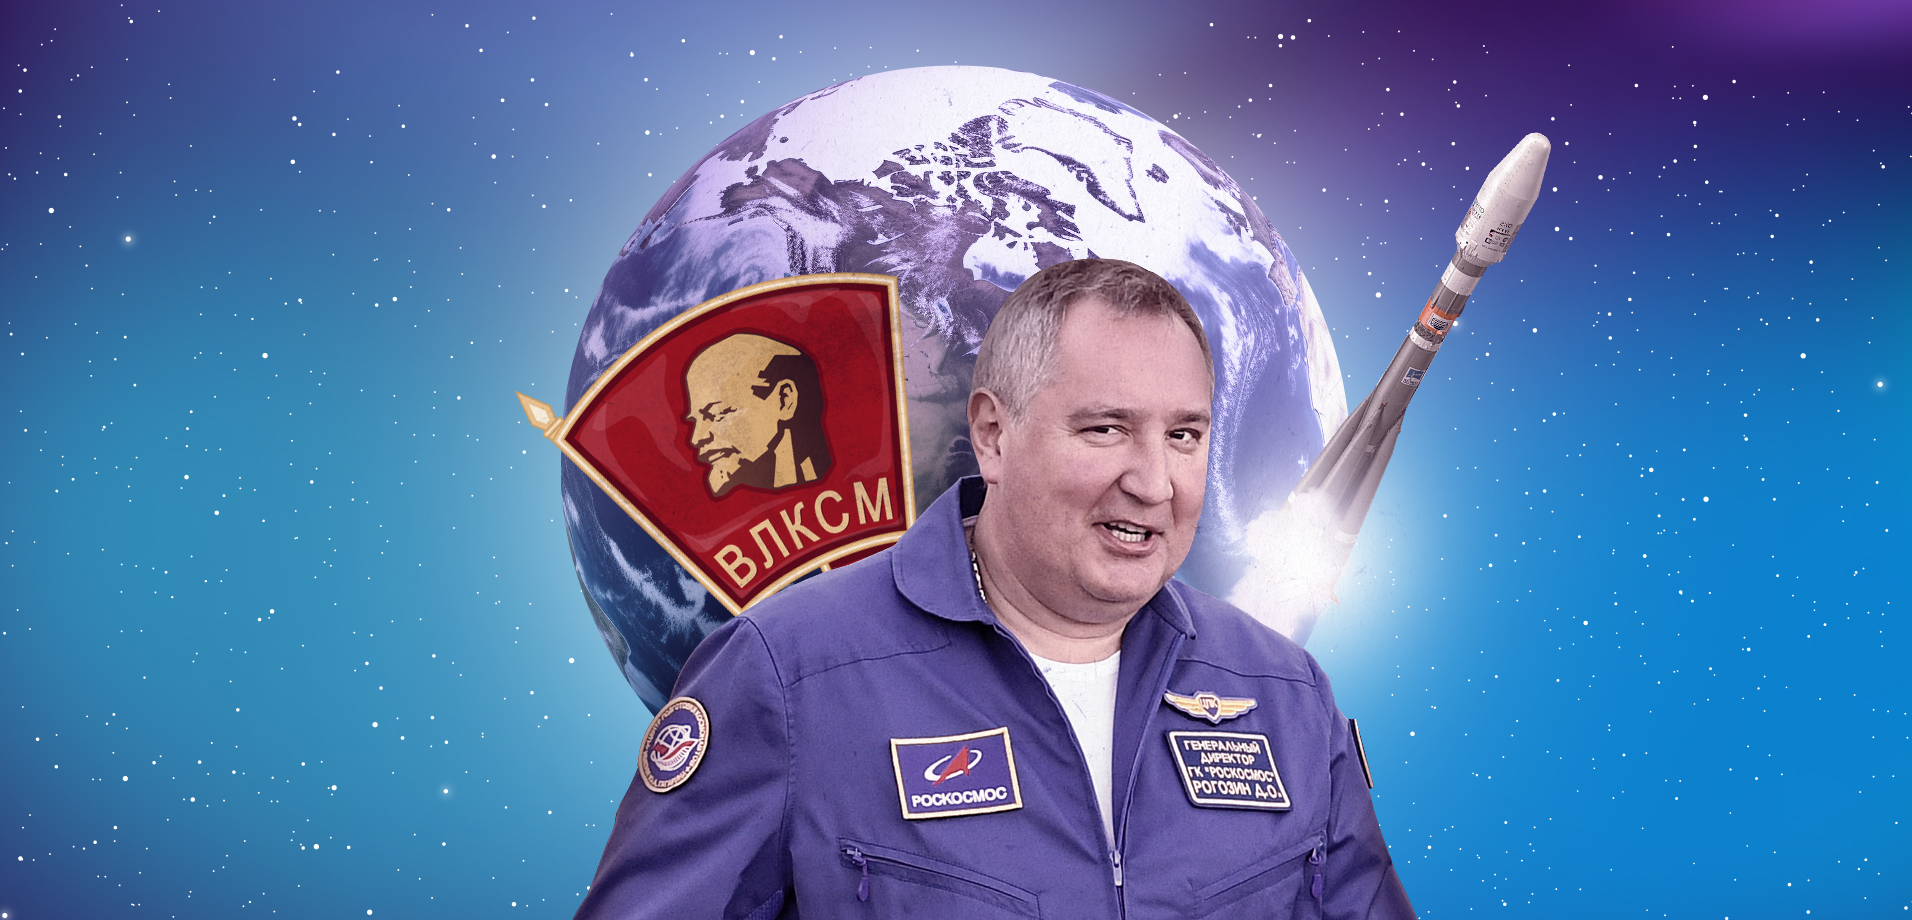 Dmitry Rogozin: from Komsomol Member to Russian Space Chief